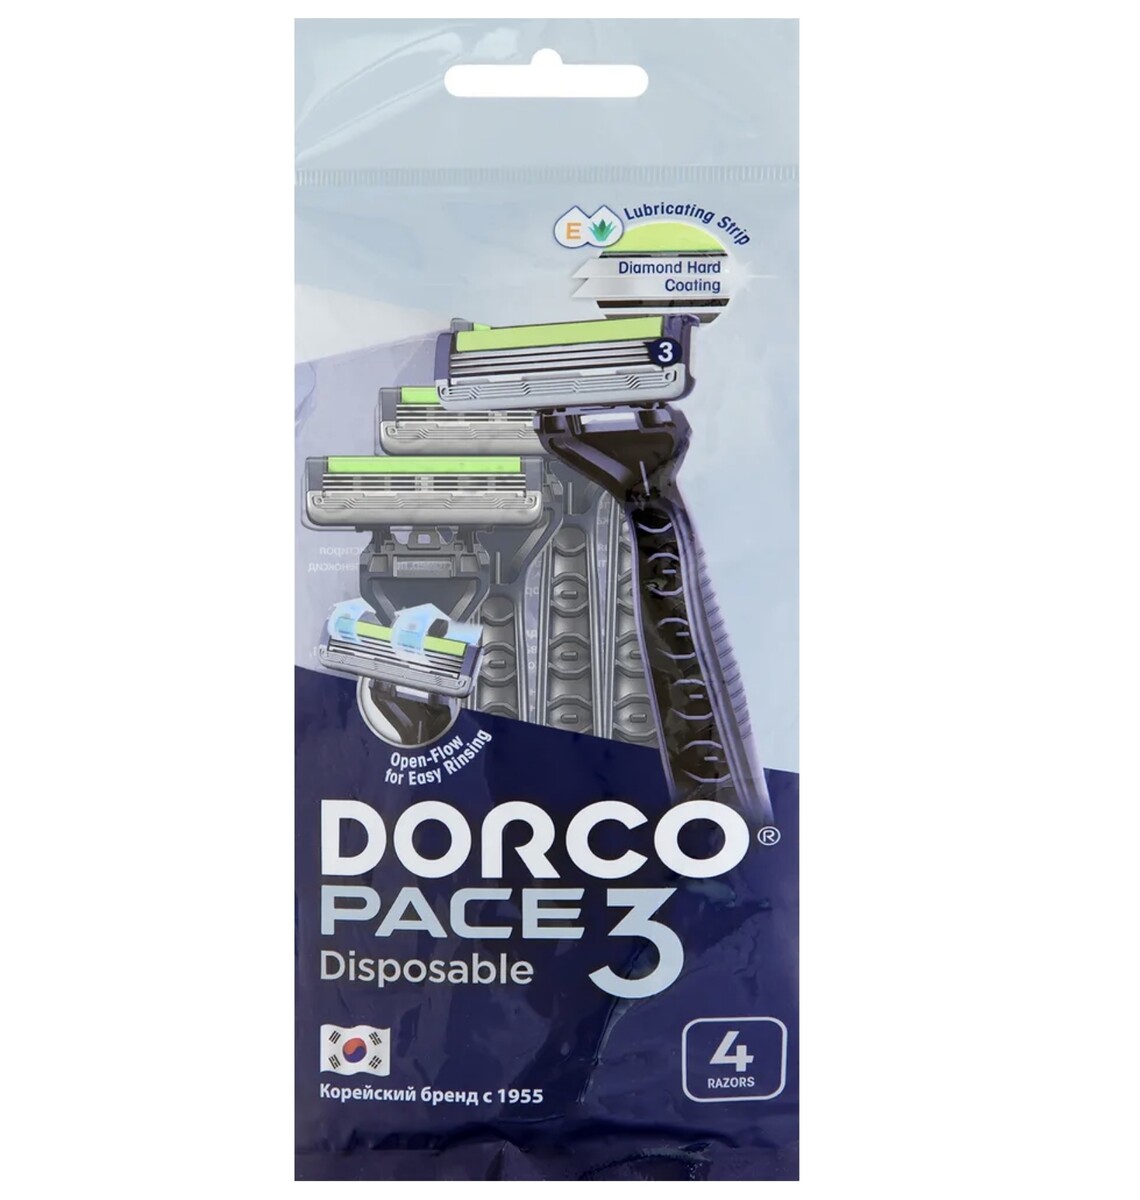 Dorco pace3 однораз.станок 4шт. плав.голв, с 3лезвиями увл.полоса new (ю.корея) dorco pace7 4 s сменные кассеты с 7лезвиями ю корея